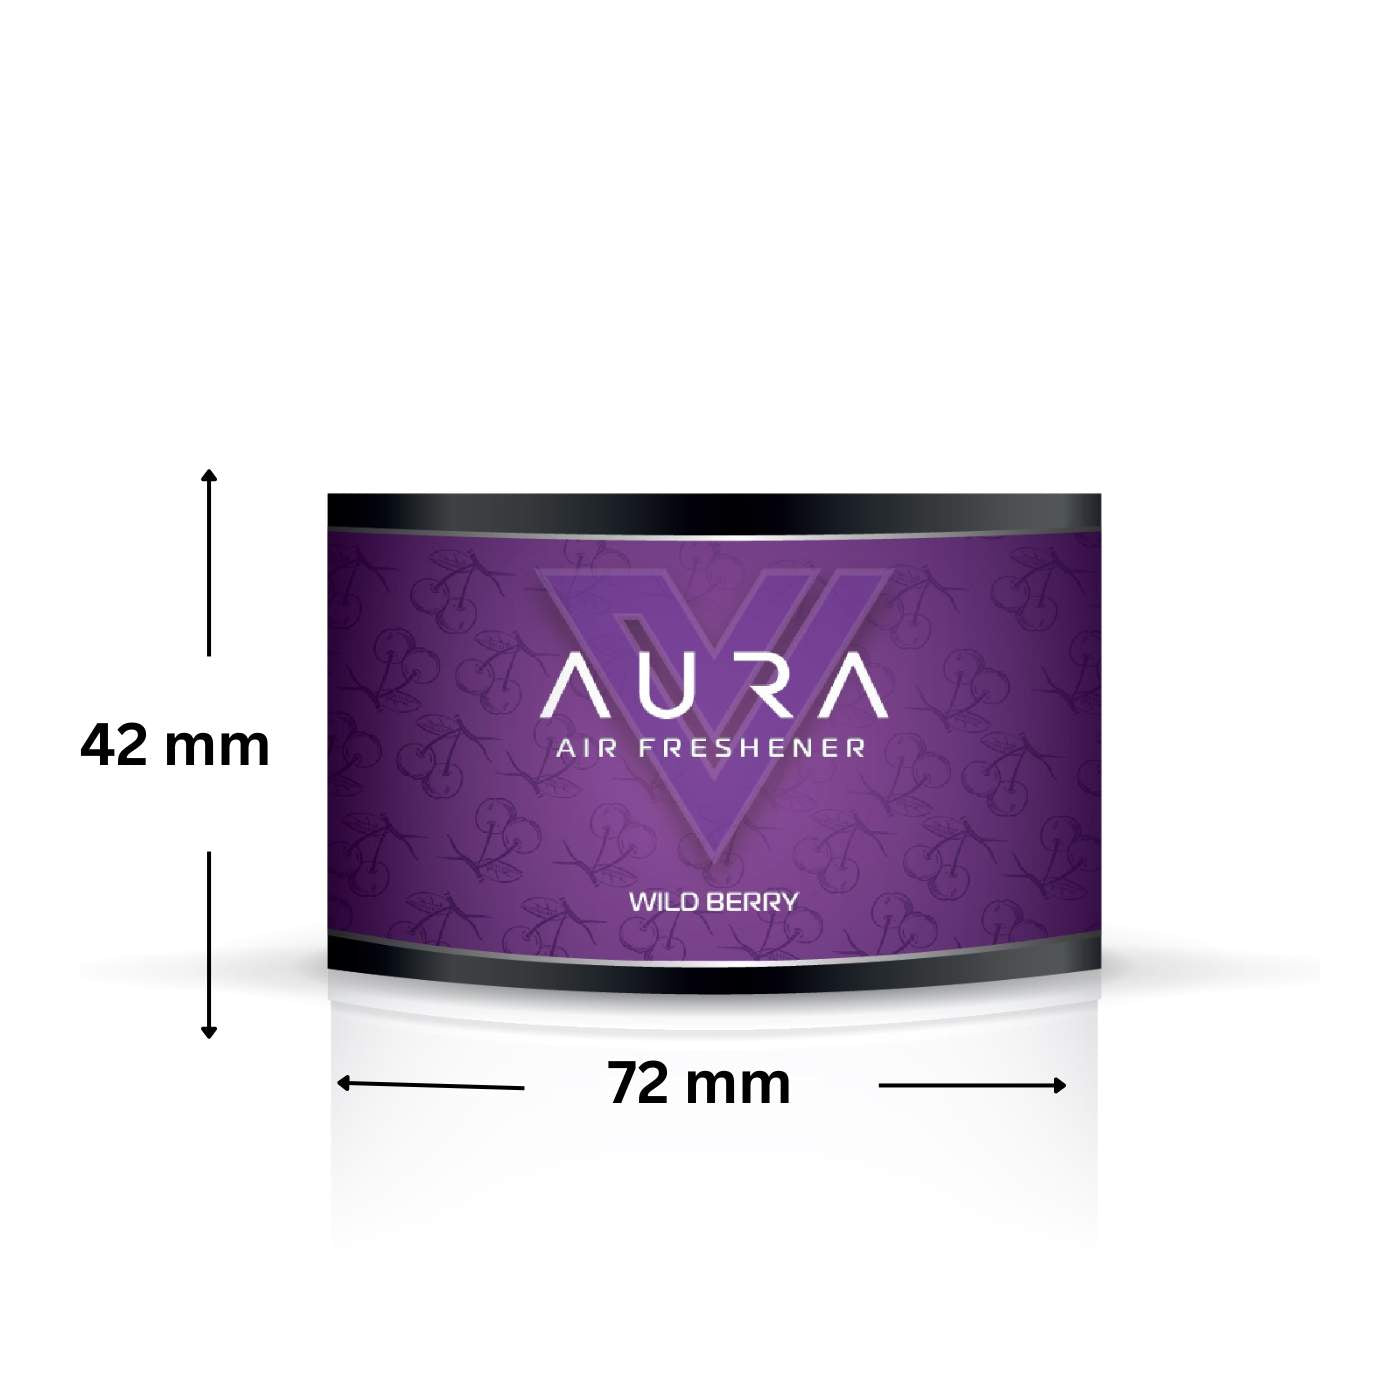 Vista Aura Wild Berry Organic Air Freshener 40 g